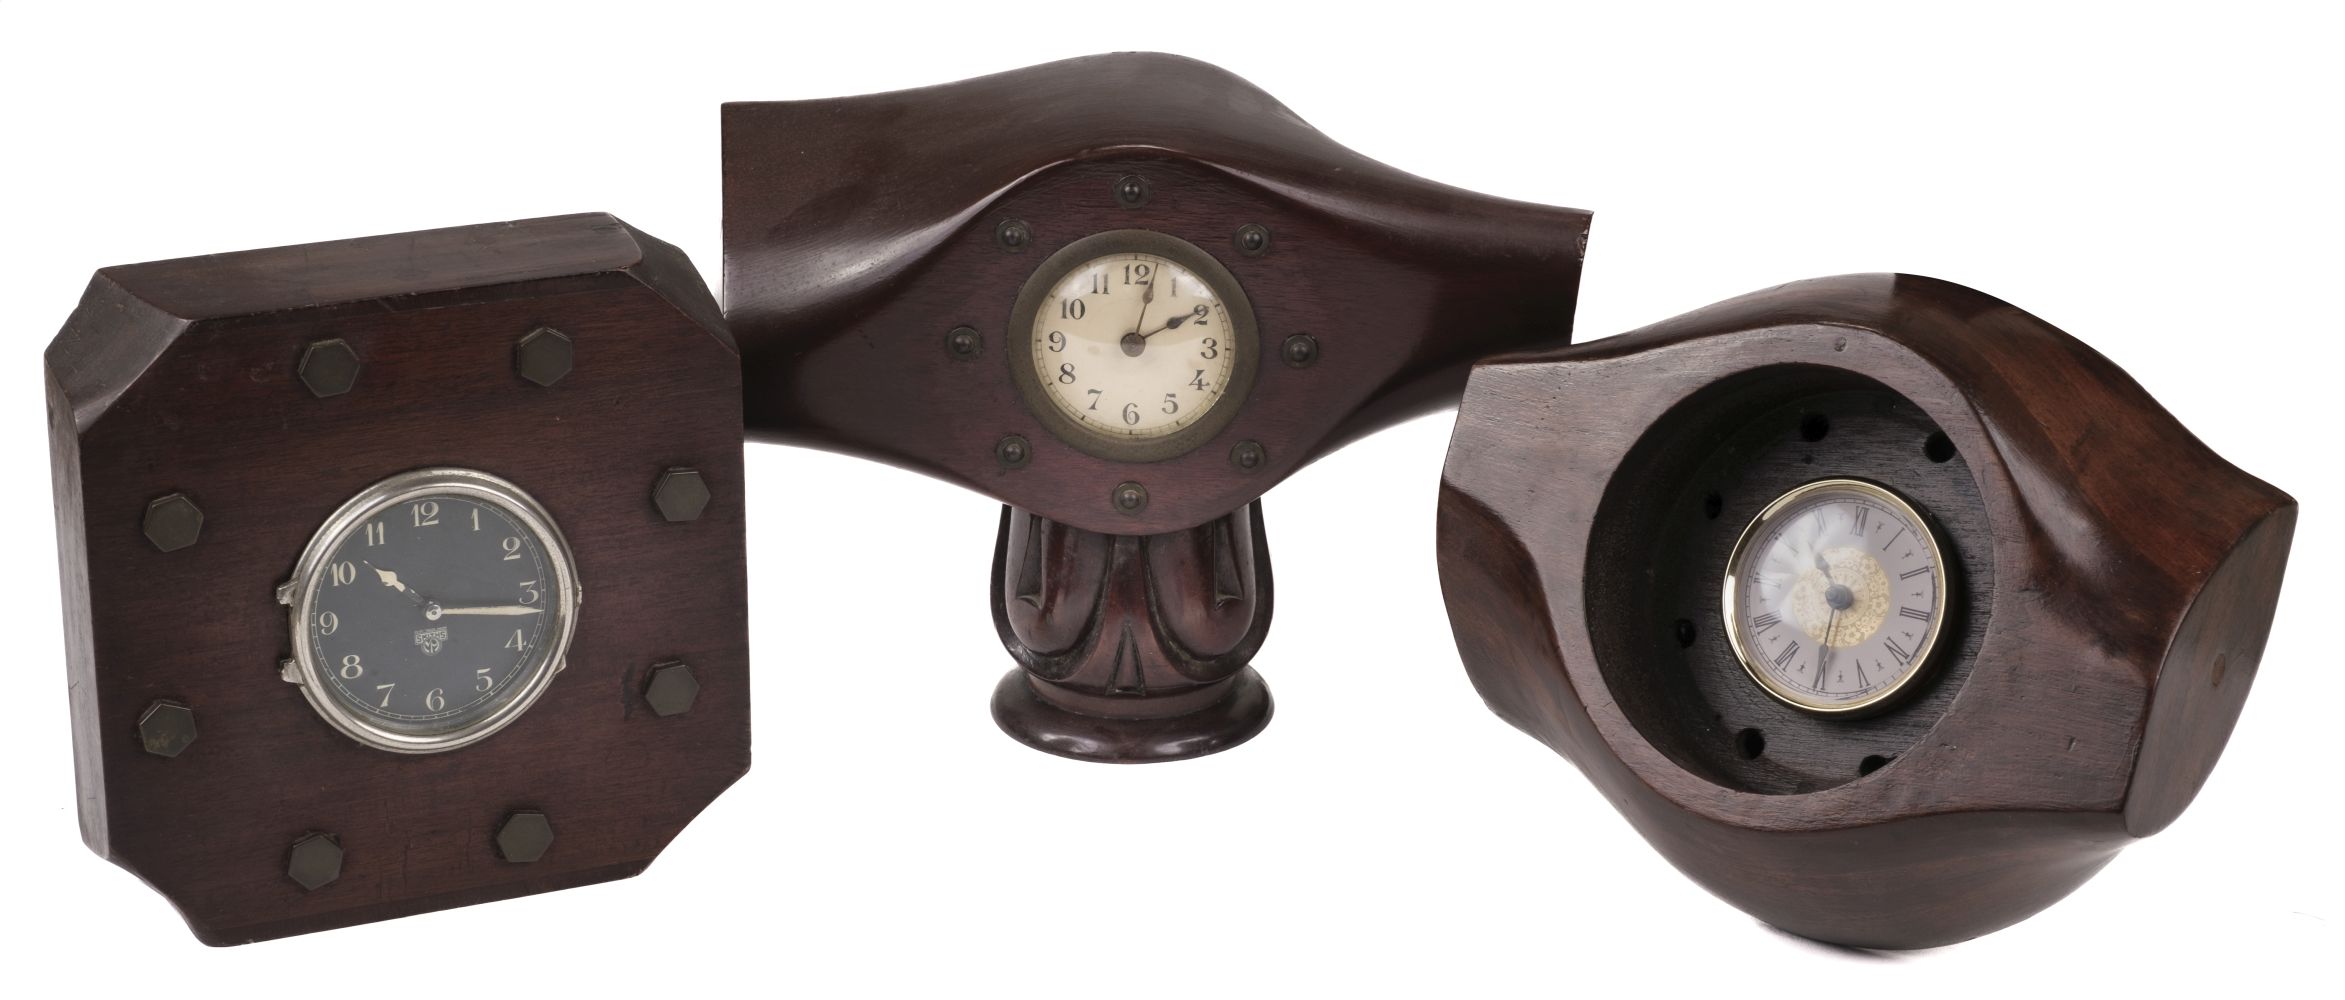 Propeller Clocks. WWI aircraft propeller clock, circa 1915